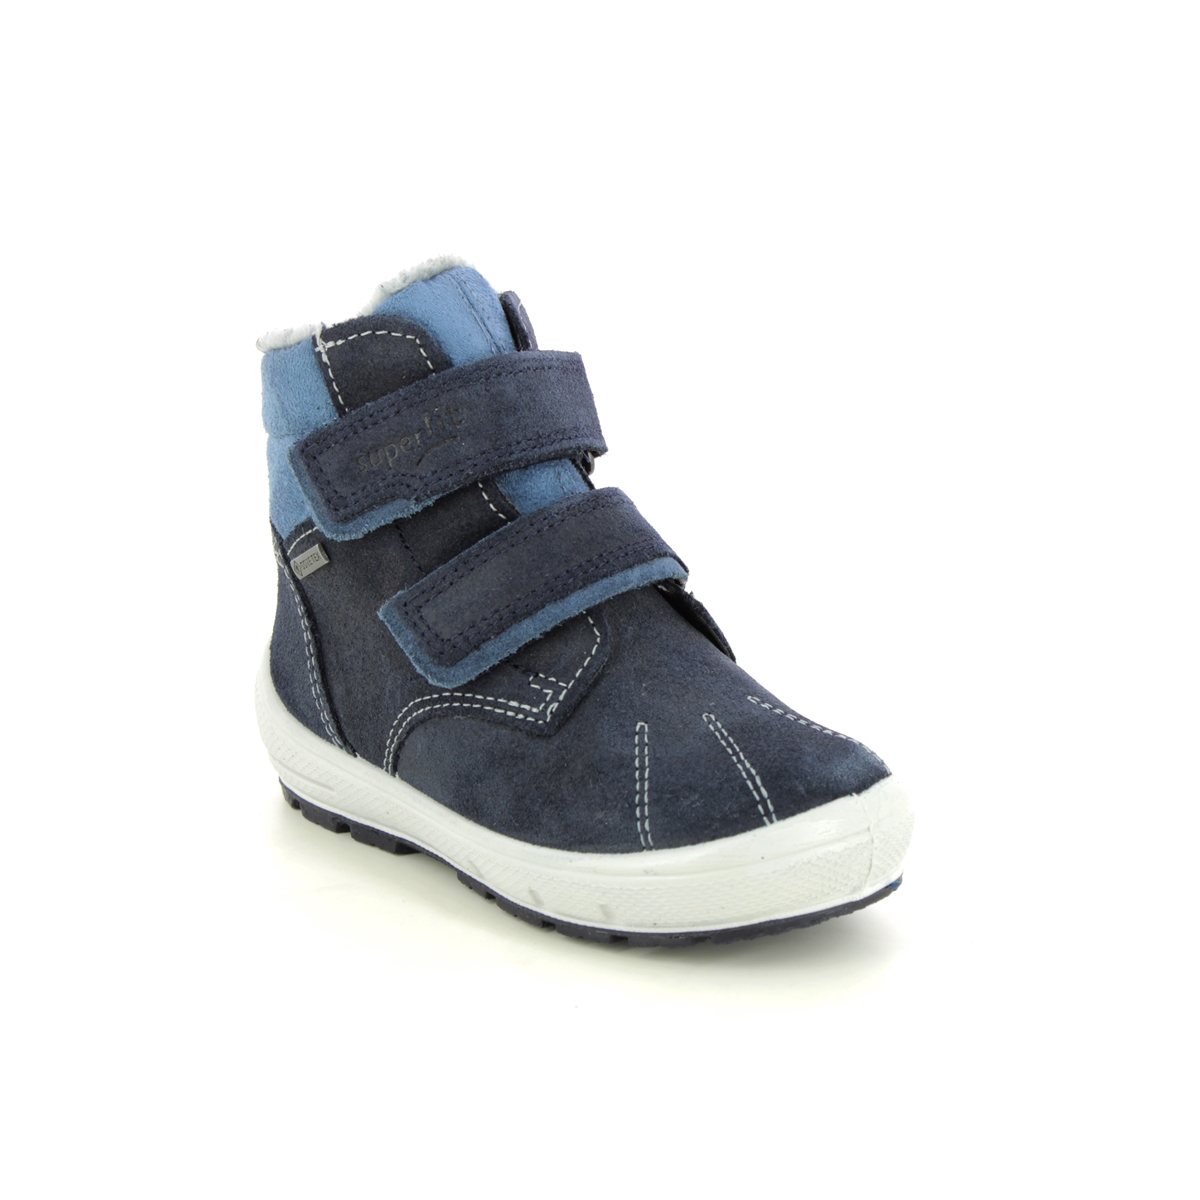 Superfit Groovy Gtx Navy Light Blue Kids Toddler Boys Boots 1006317-8000 In Size 28 In Plain Navy Light Blue